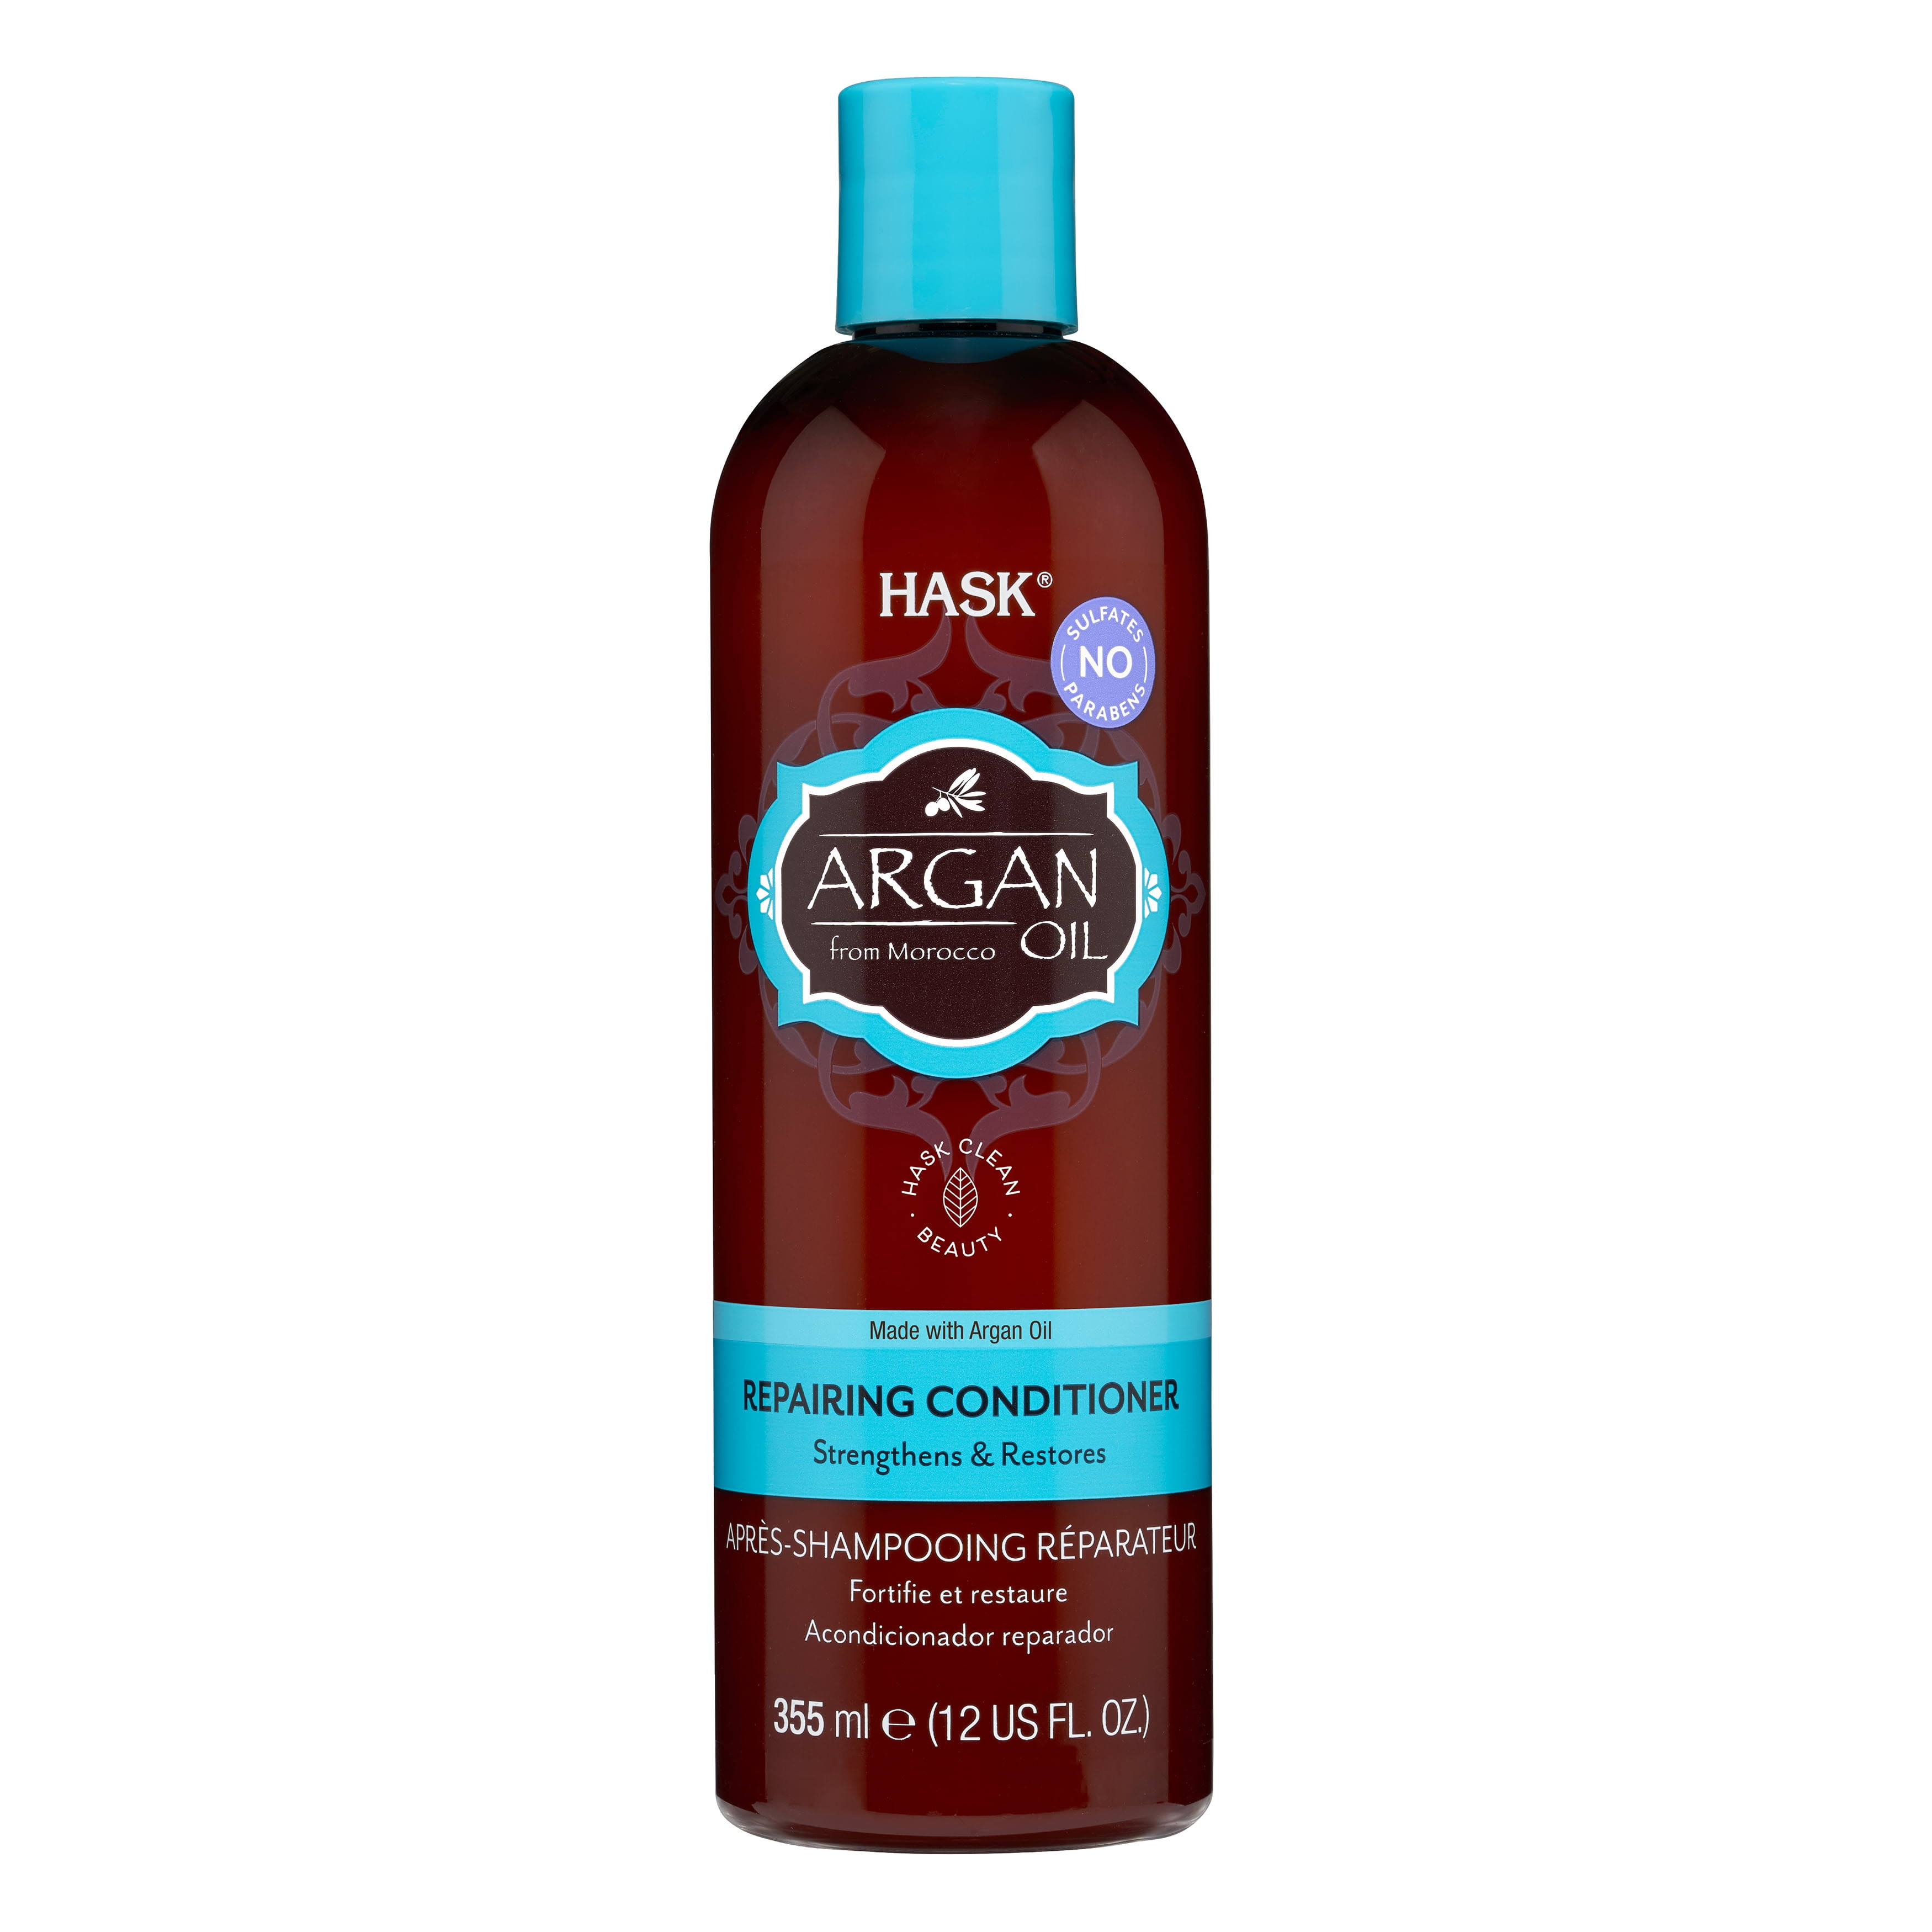 Hask Argan Oil Repairing Shampoo - 12 fl oz bottle